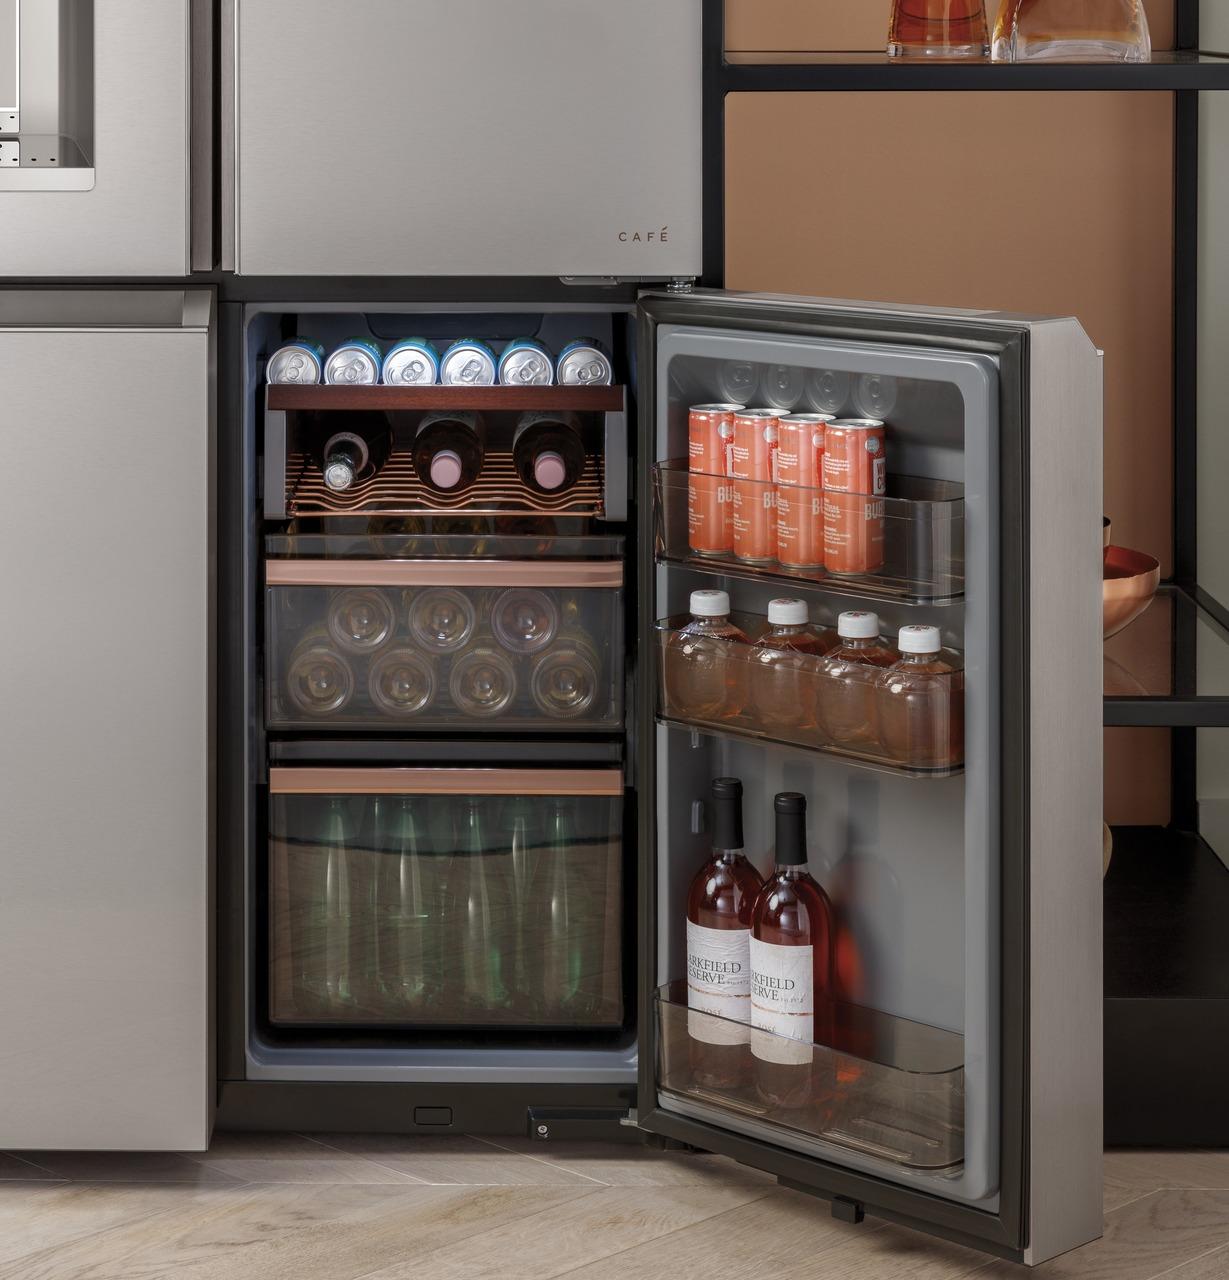 Caf(eback)™ ENERGY STAR® 27.4 Cu. Ft. Smart Quad-Door Refrigerator in Platinum Glass